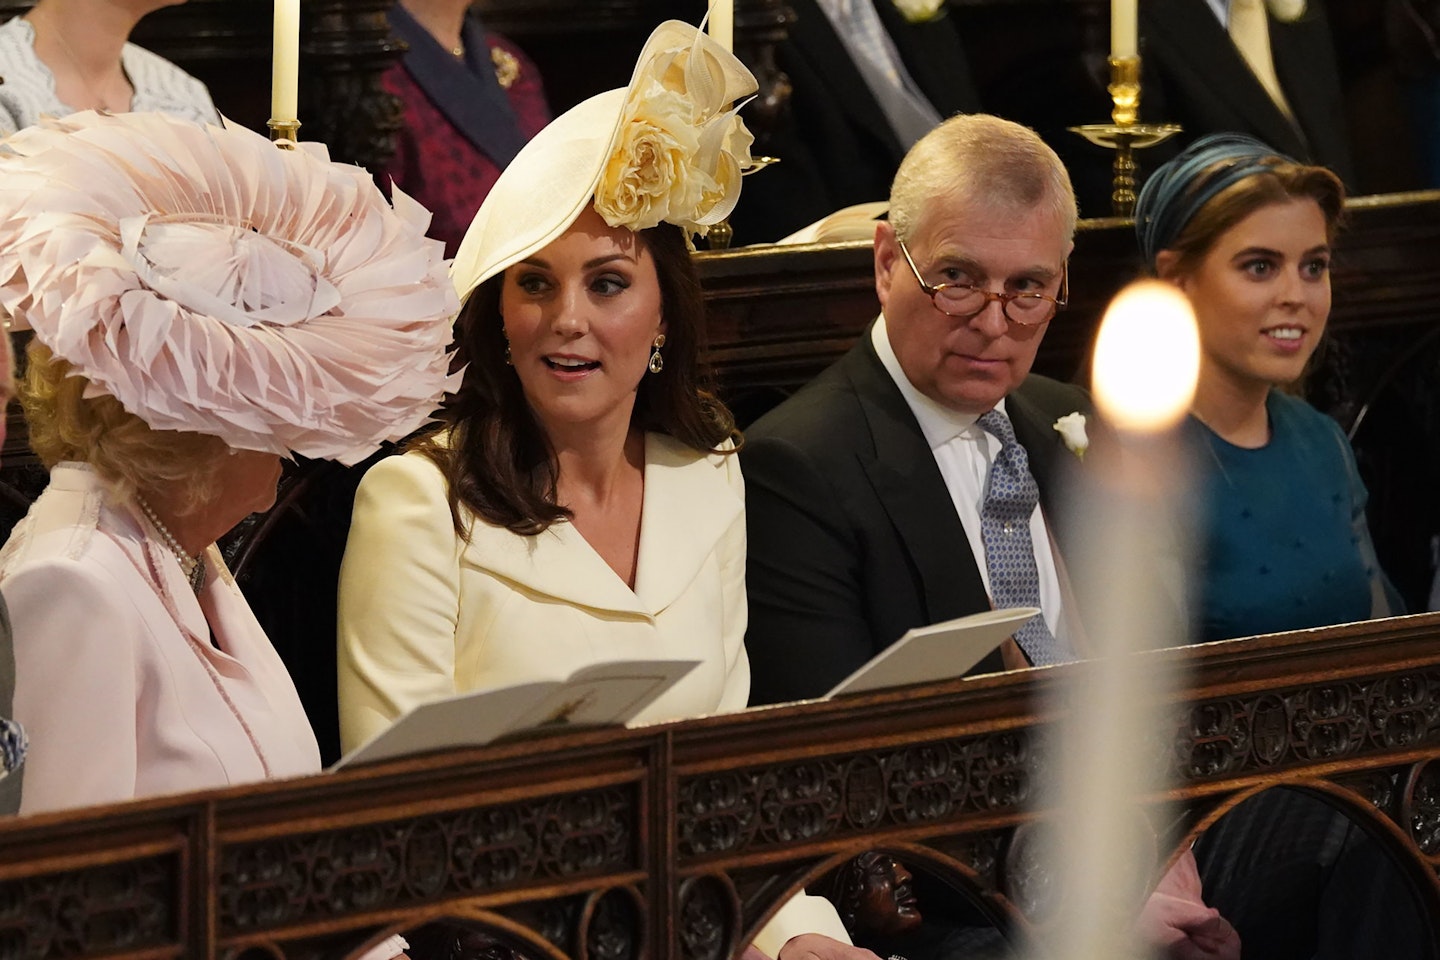 Prince Harry Meghan Markle Royal Wedding Guests